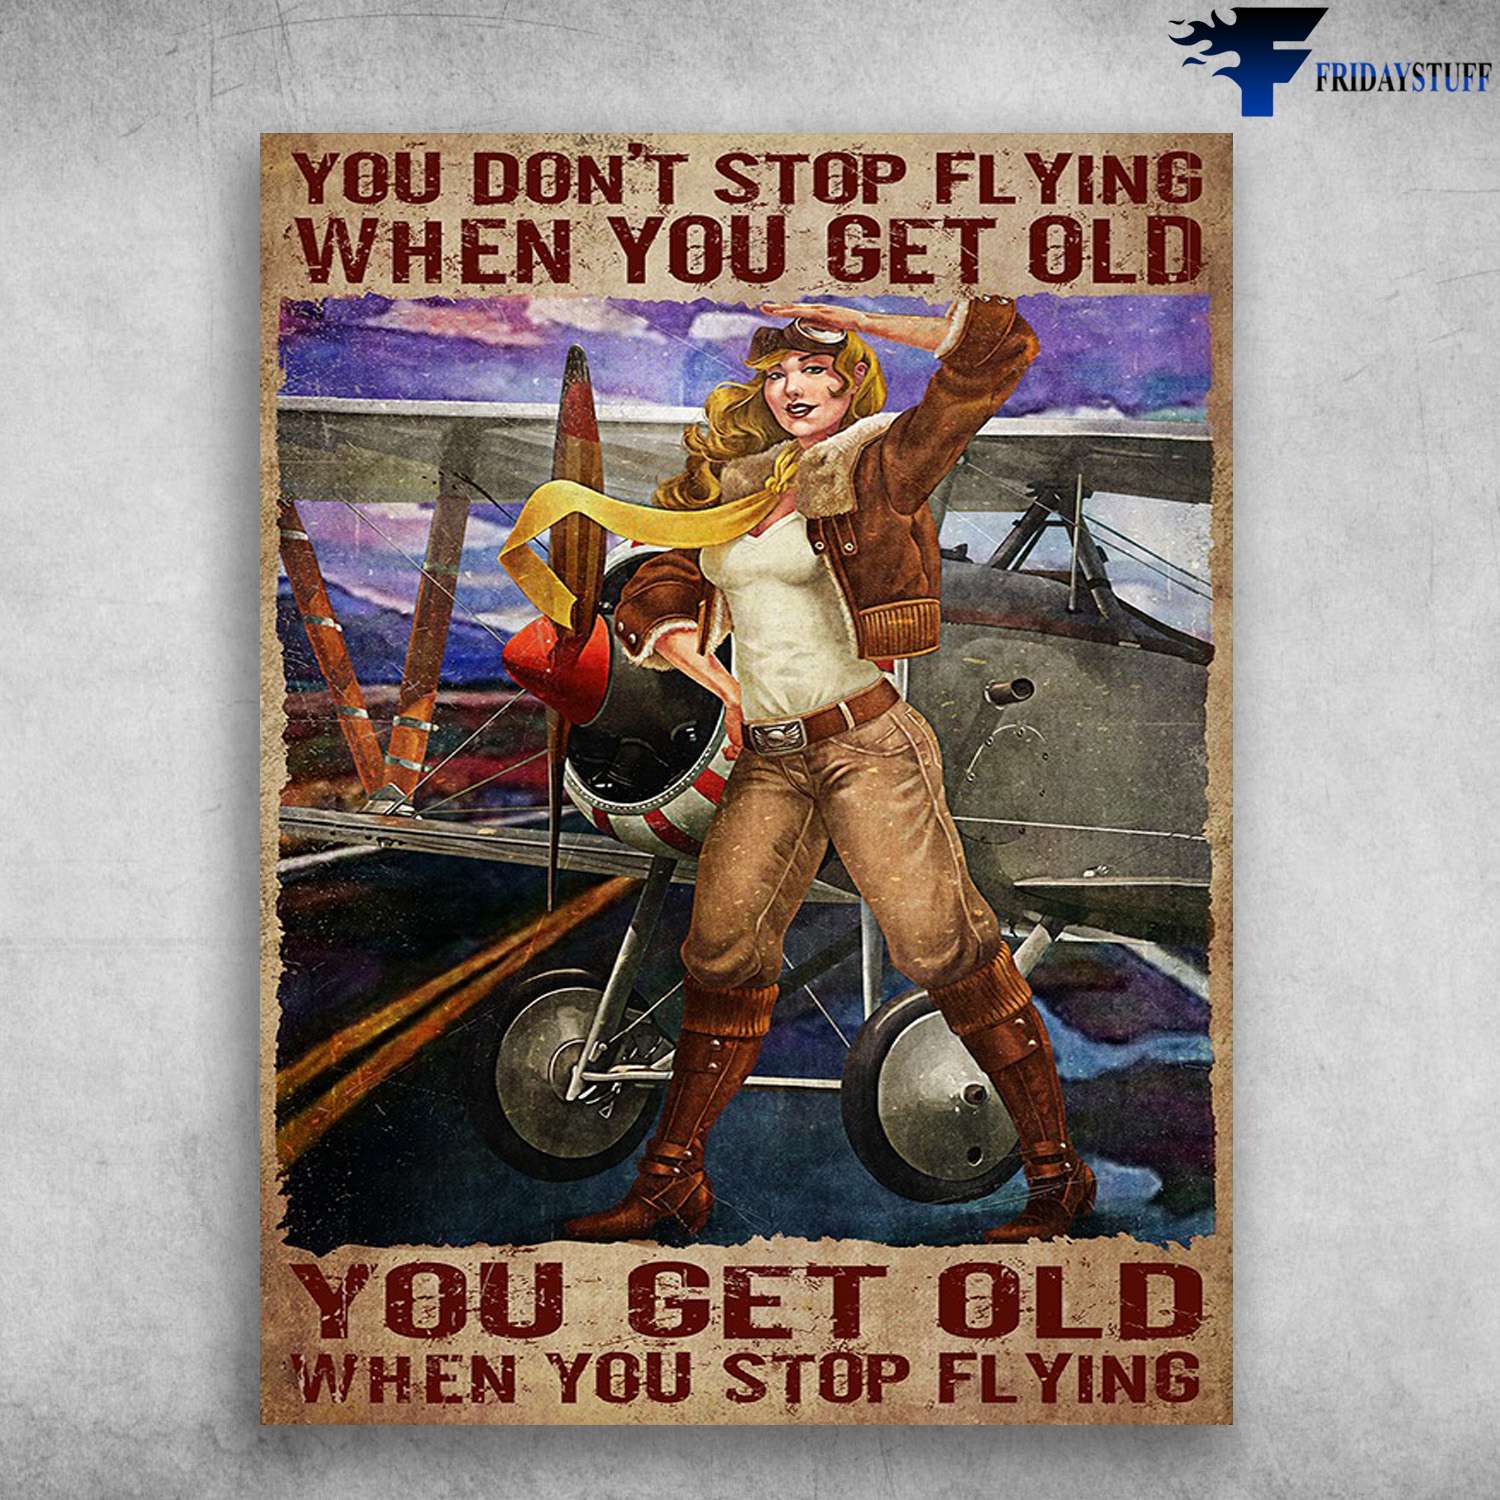 Pilot Poster, Female Pilot - You Don't Stop Flying When You Get Old, You Get Old When You Stop Flying